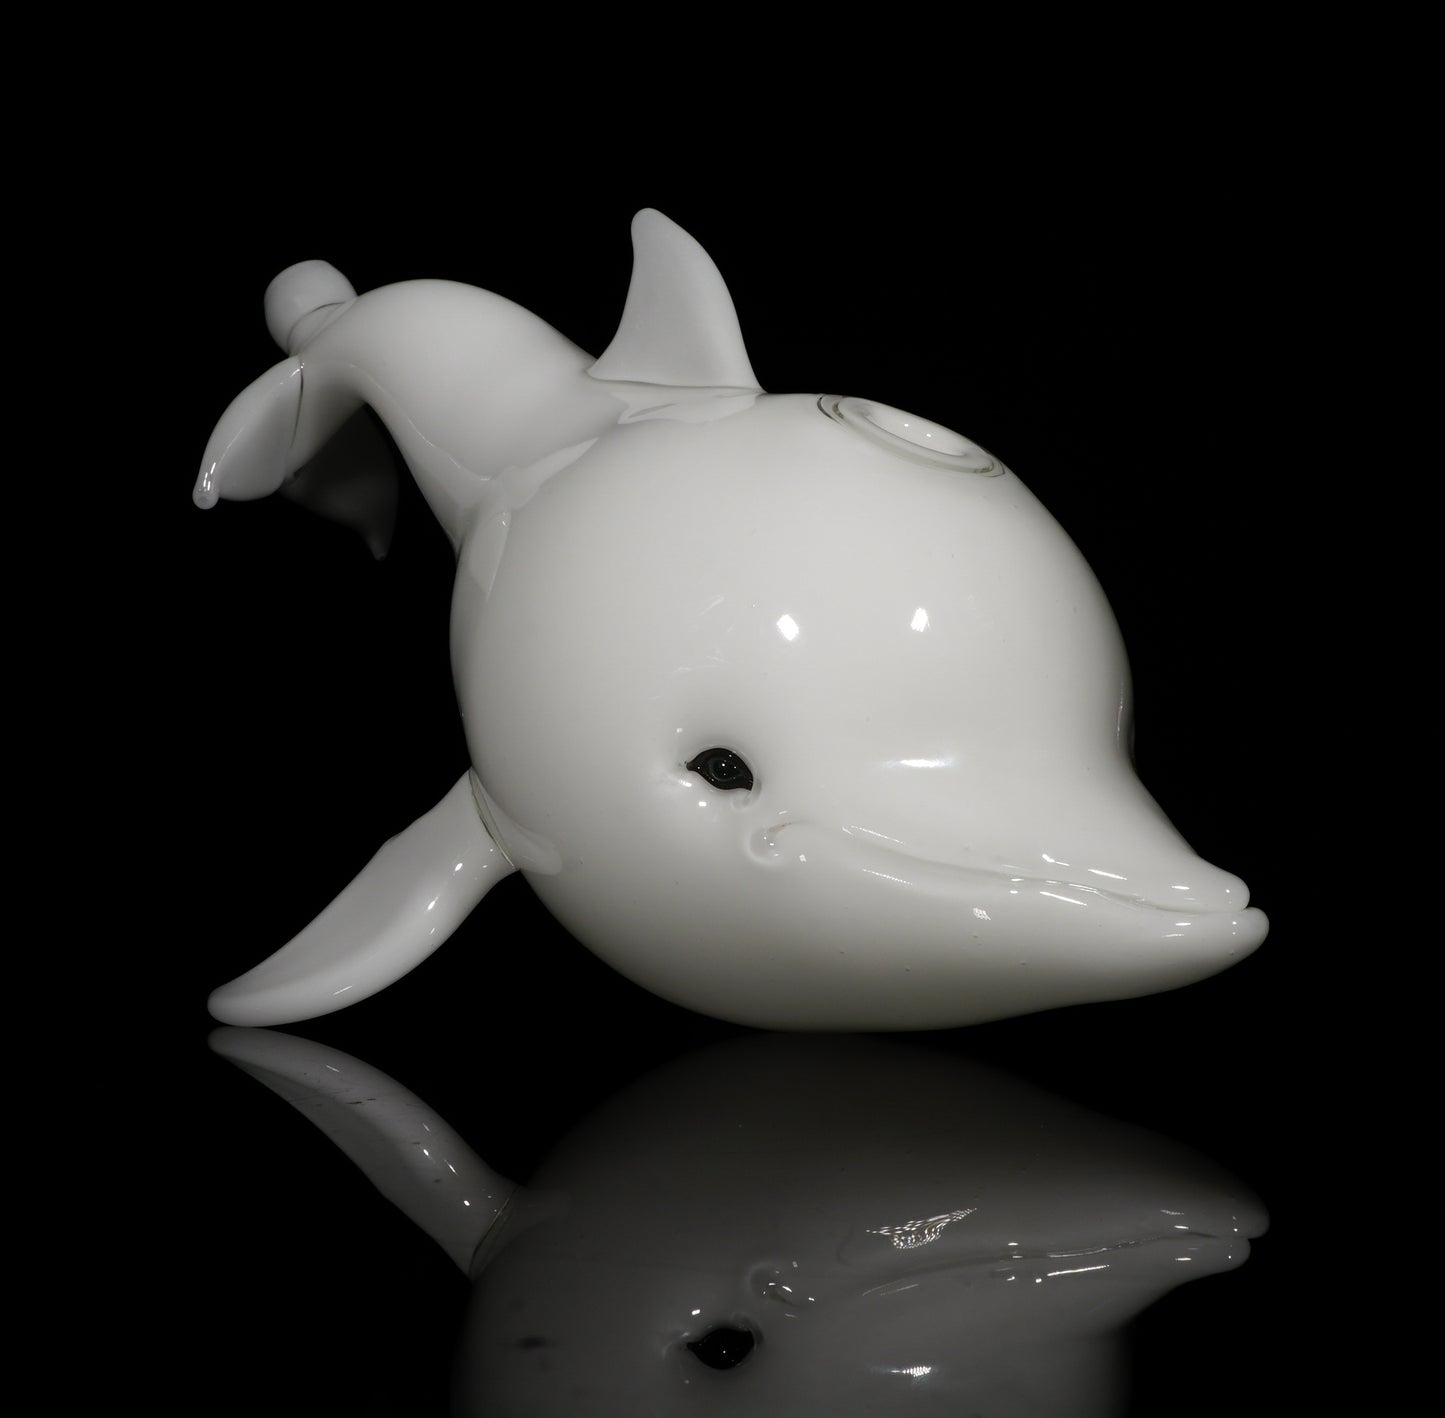 Star White Chonker Dolphin